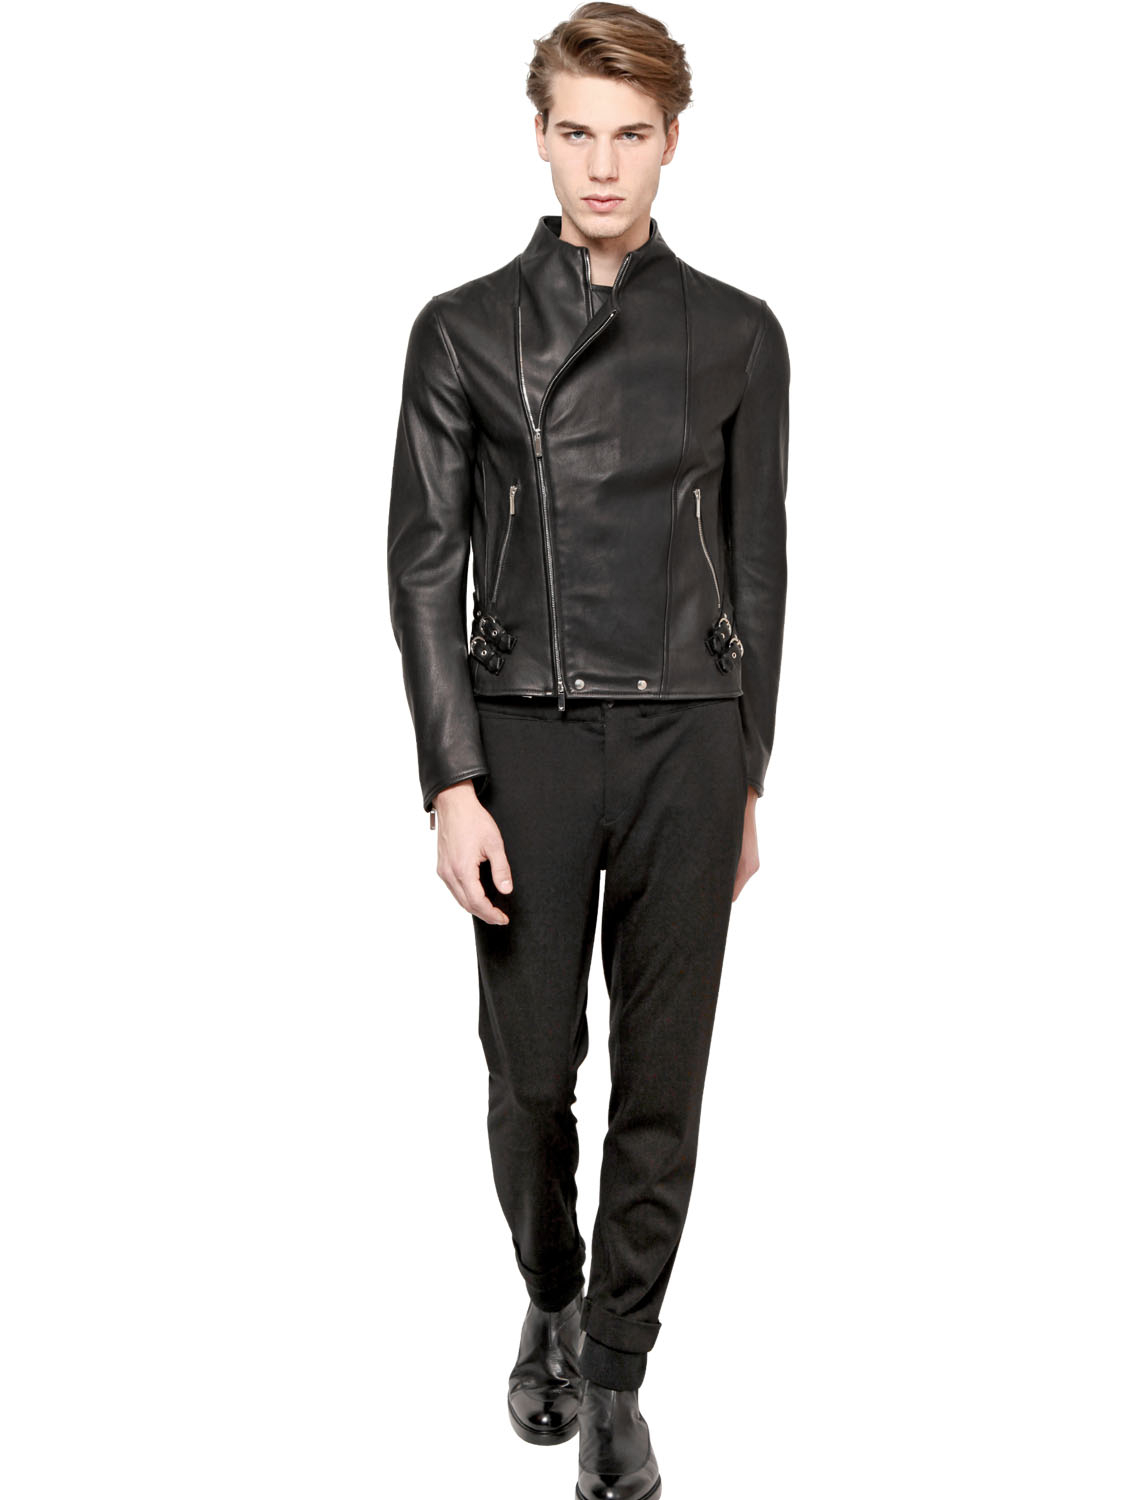 Lyst - Emporio Armani Nappa Leather Biker Jacket in Black for Men